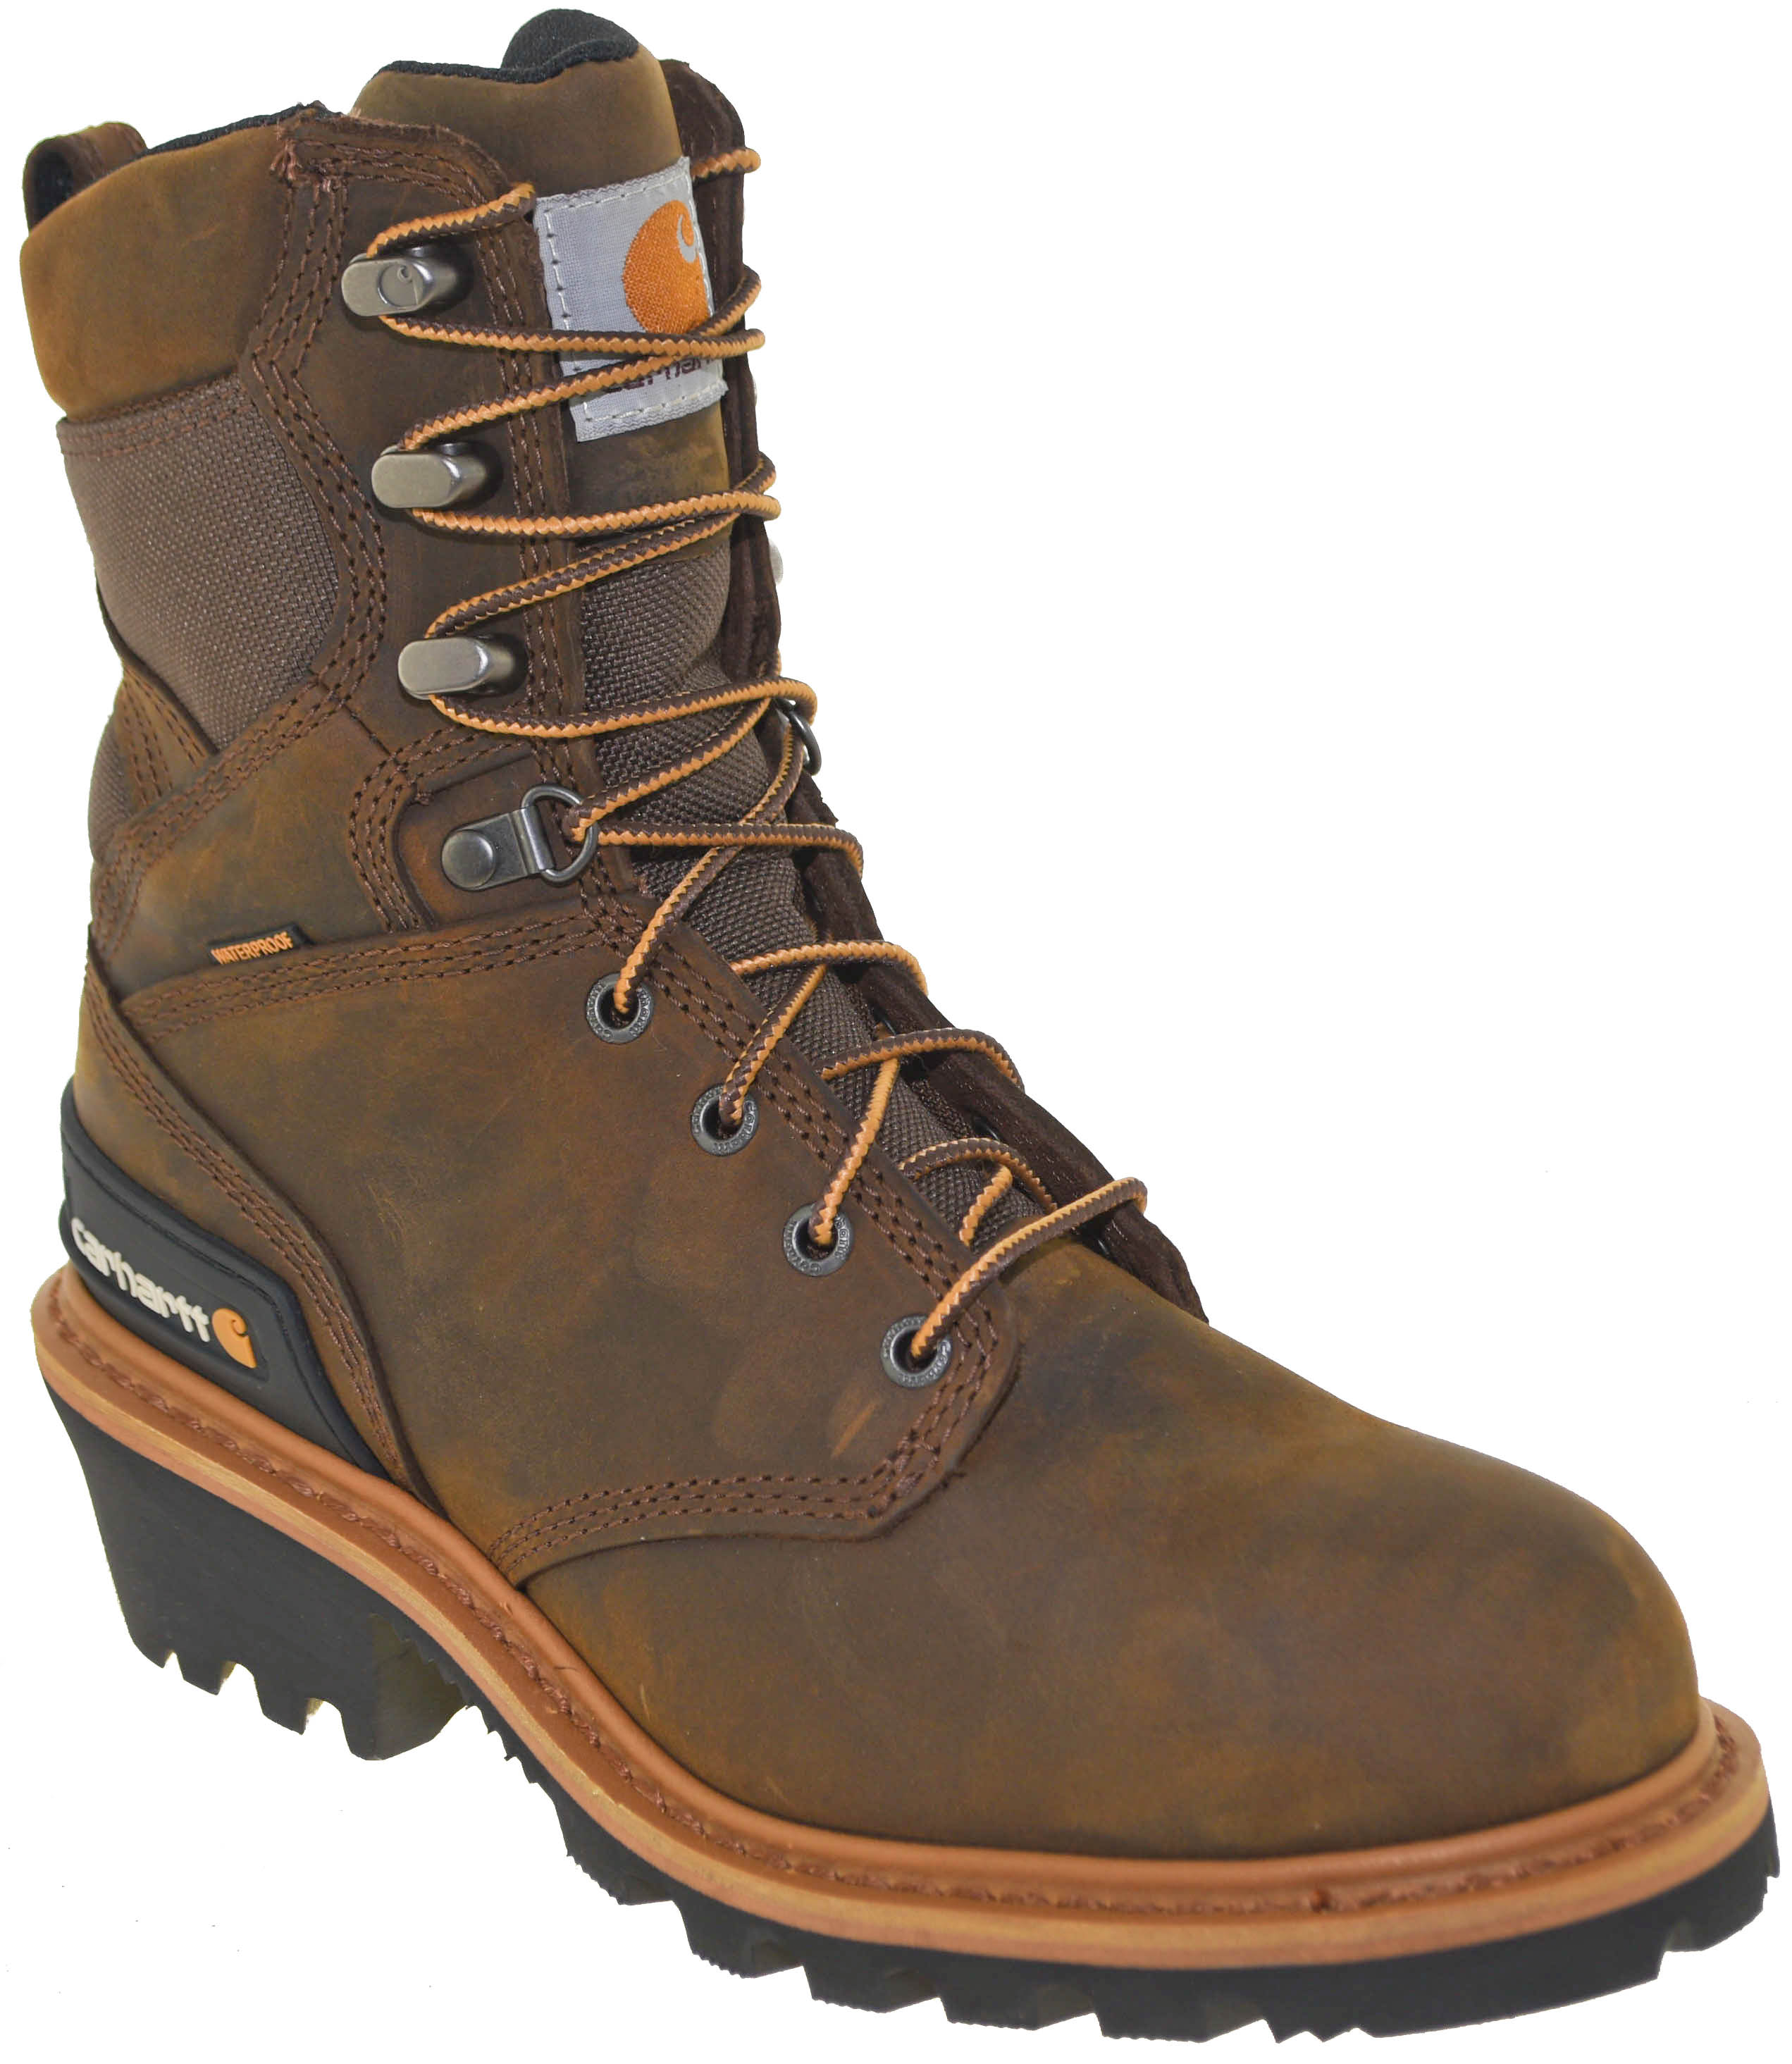 carhartt steel toe logger boots